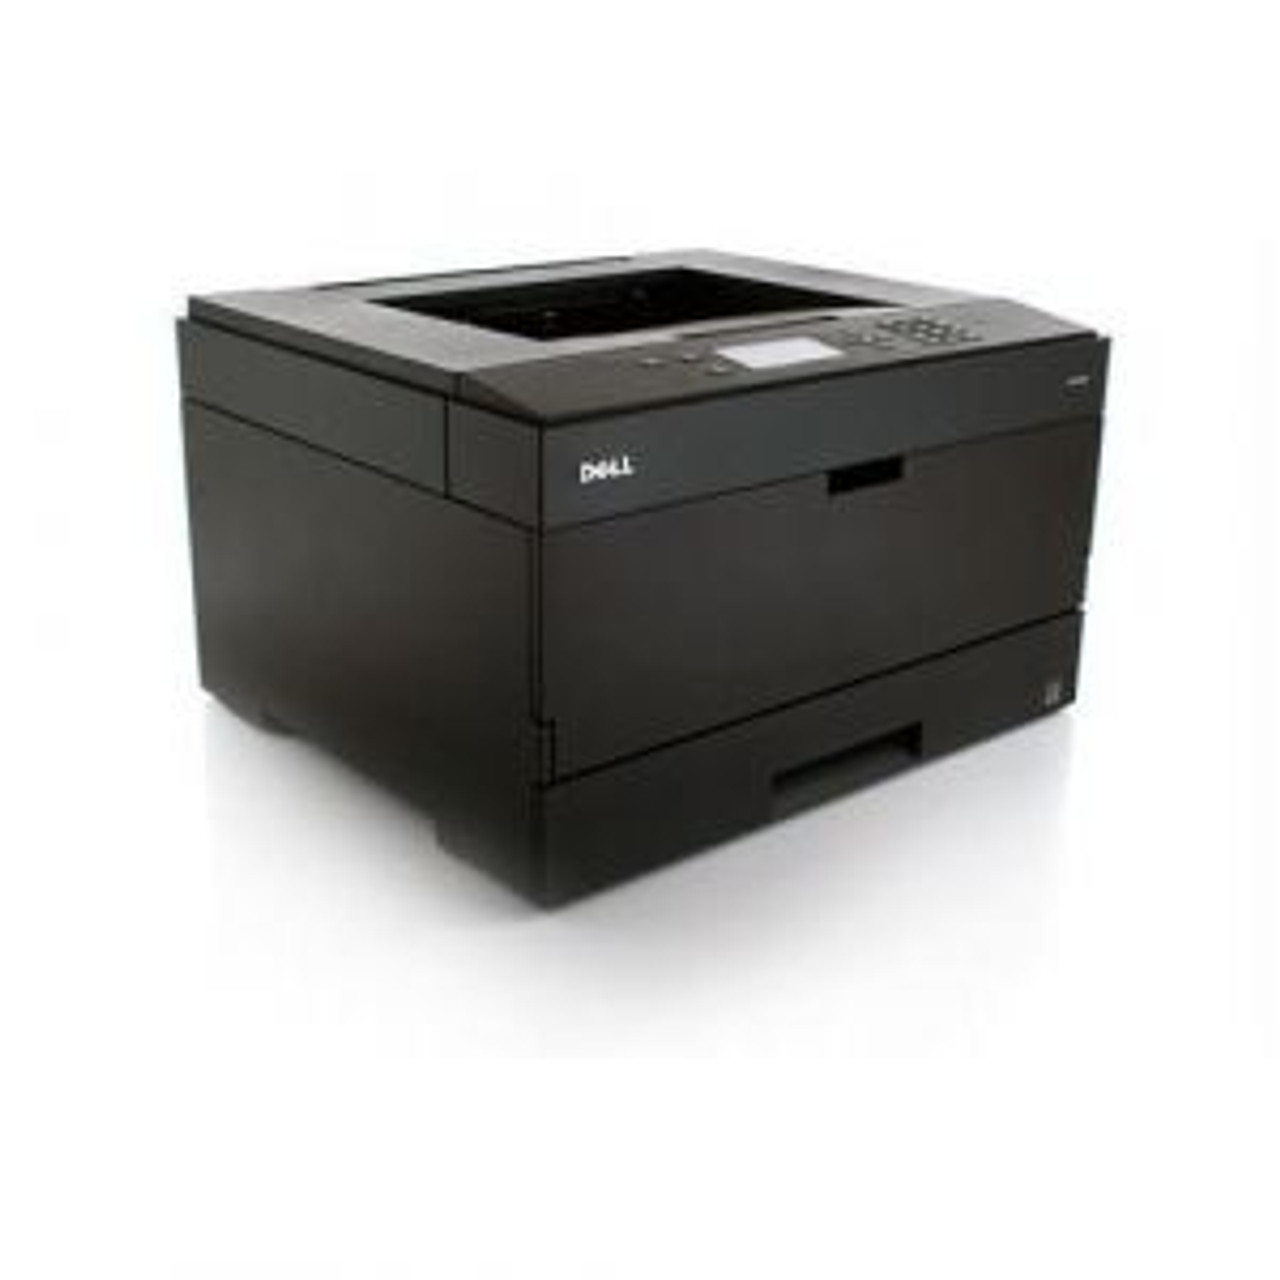 S2500N Dell Laser Printer